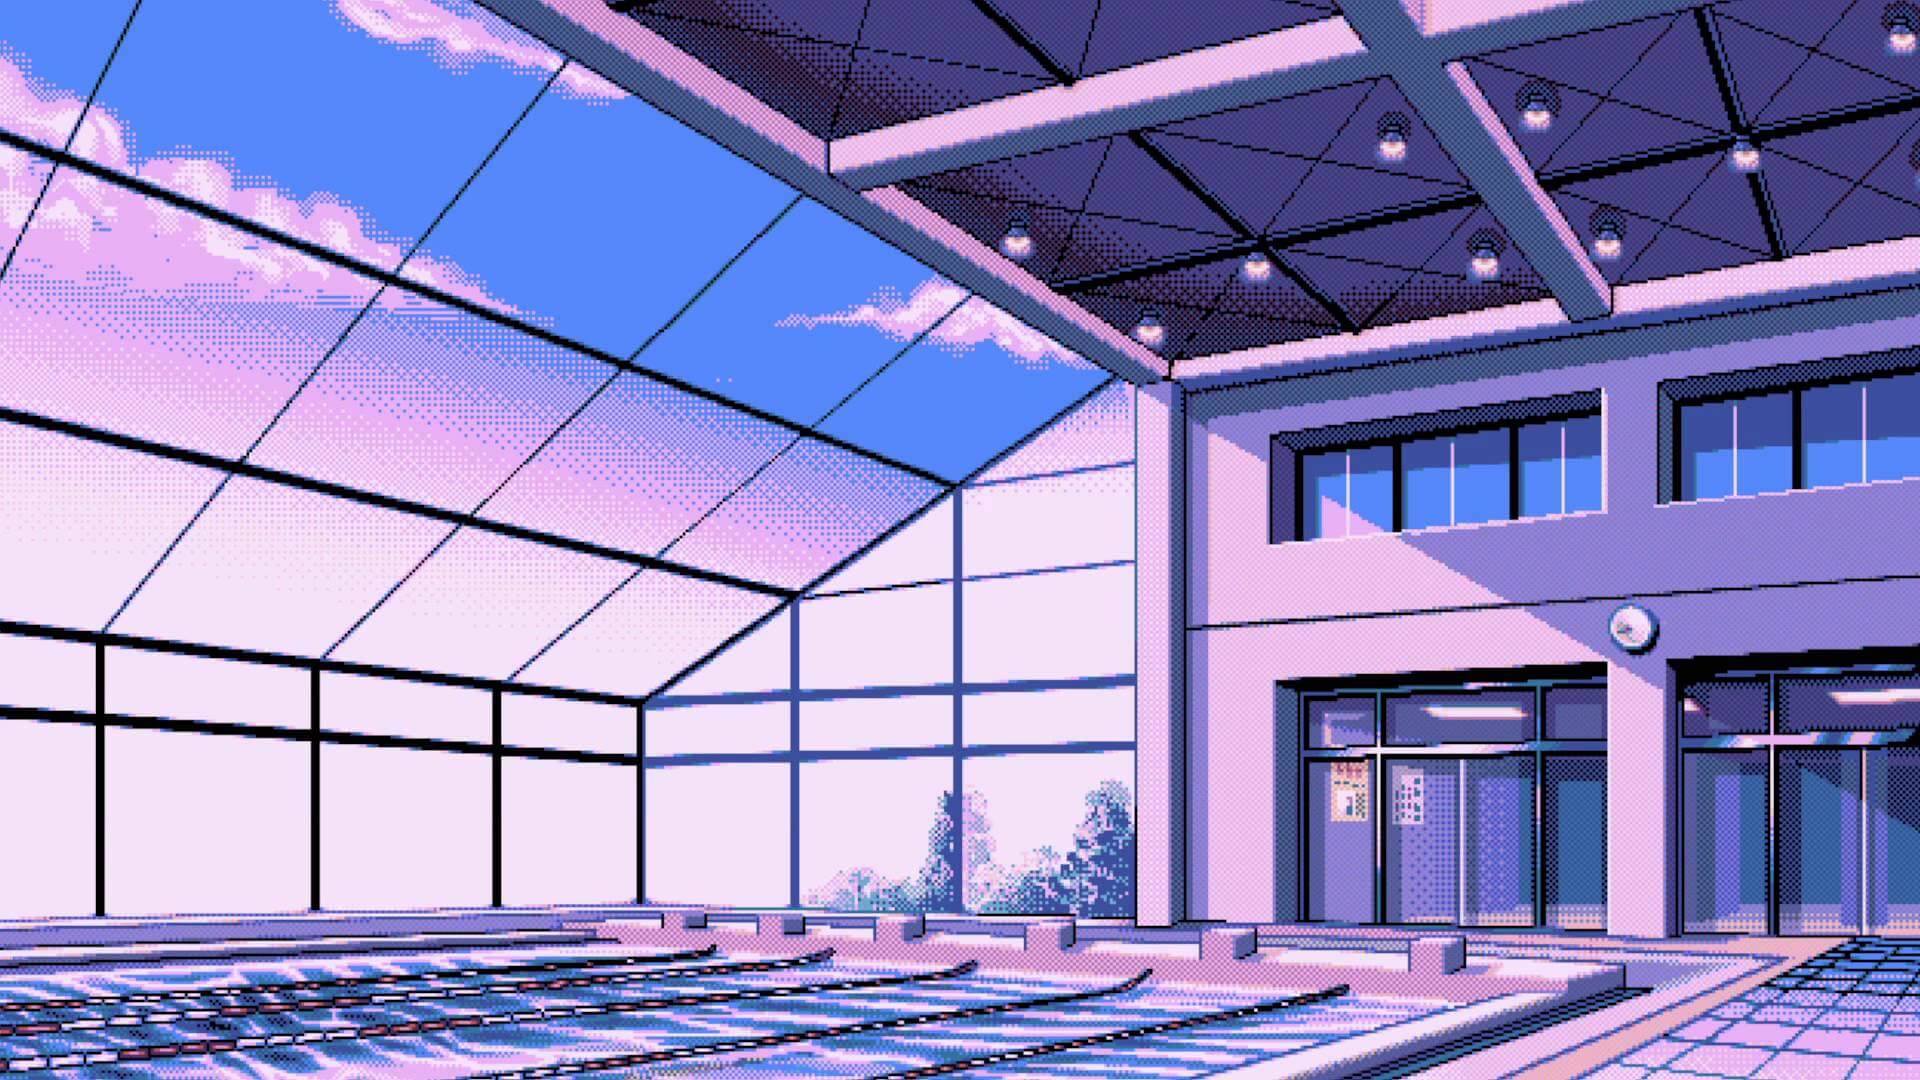 pixelated art of a pool